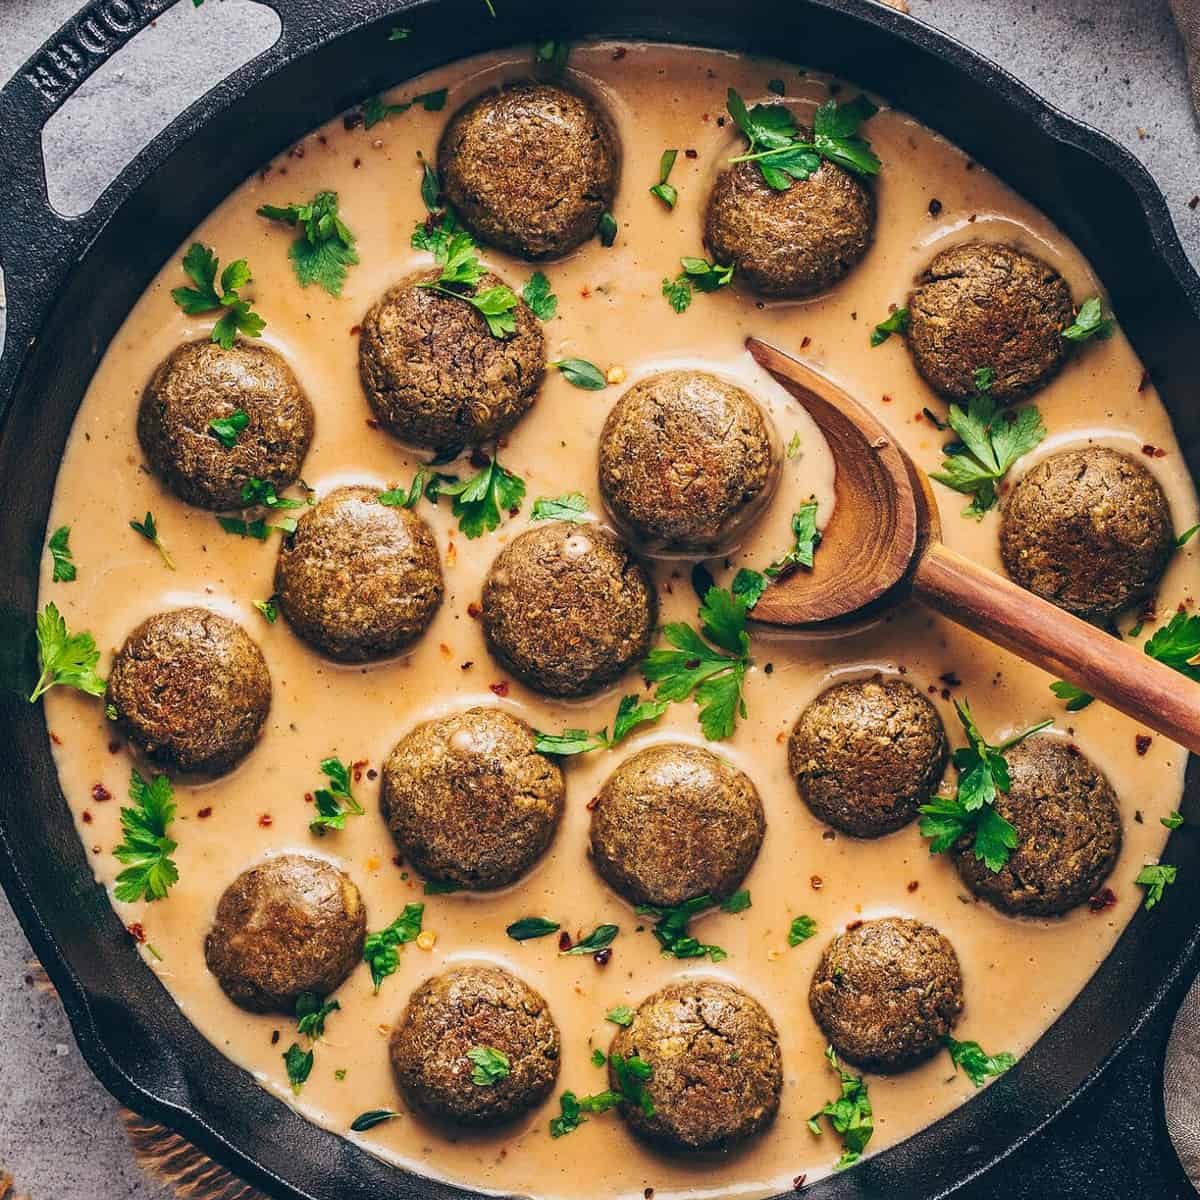  Making your own vegetarian meatballs has never been easier.